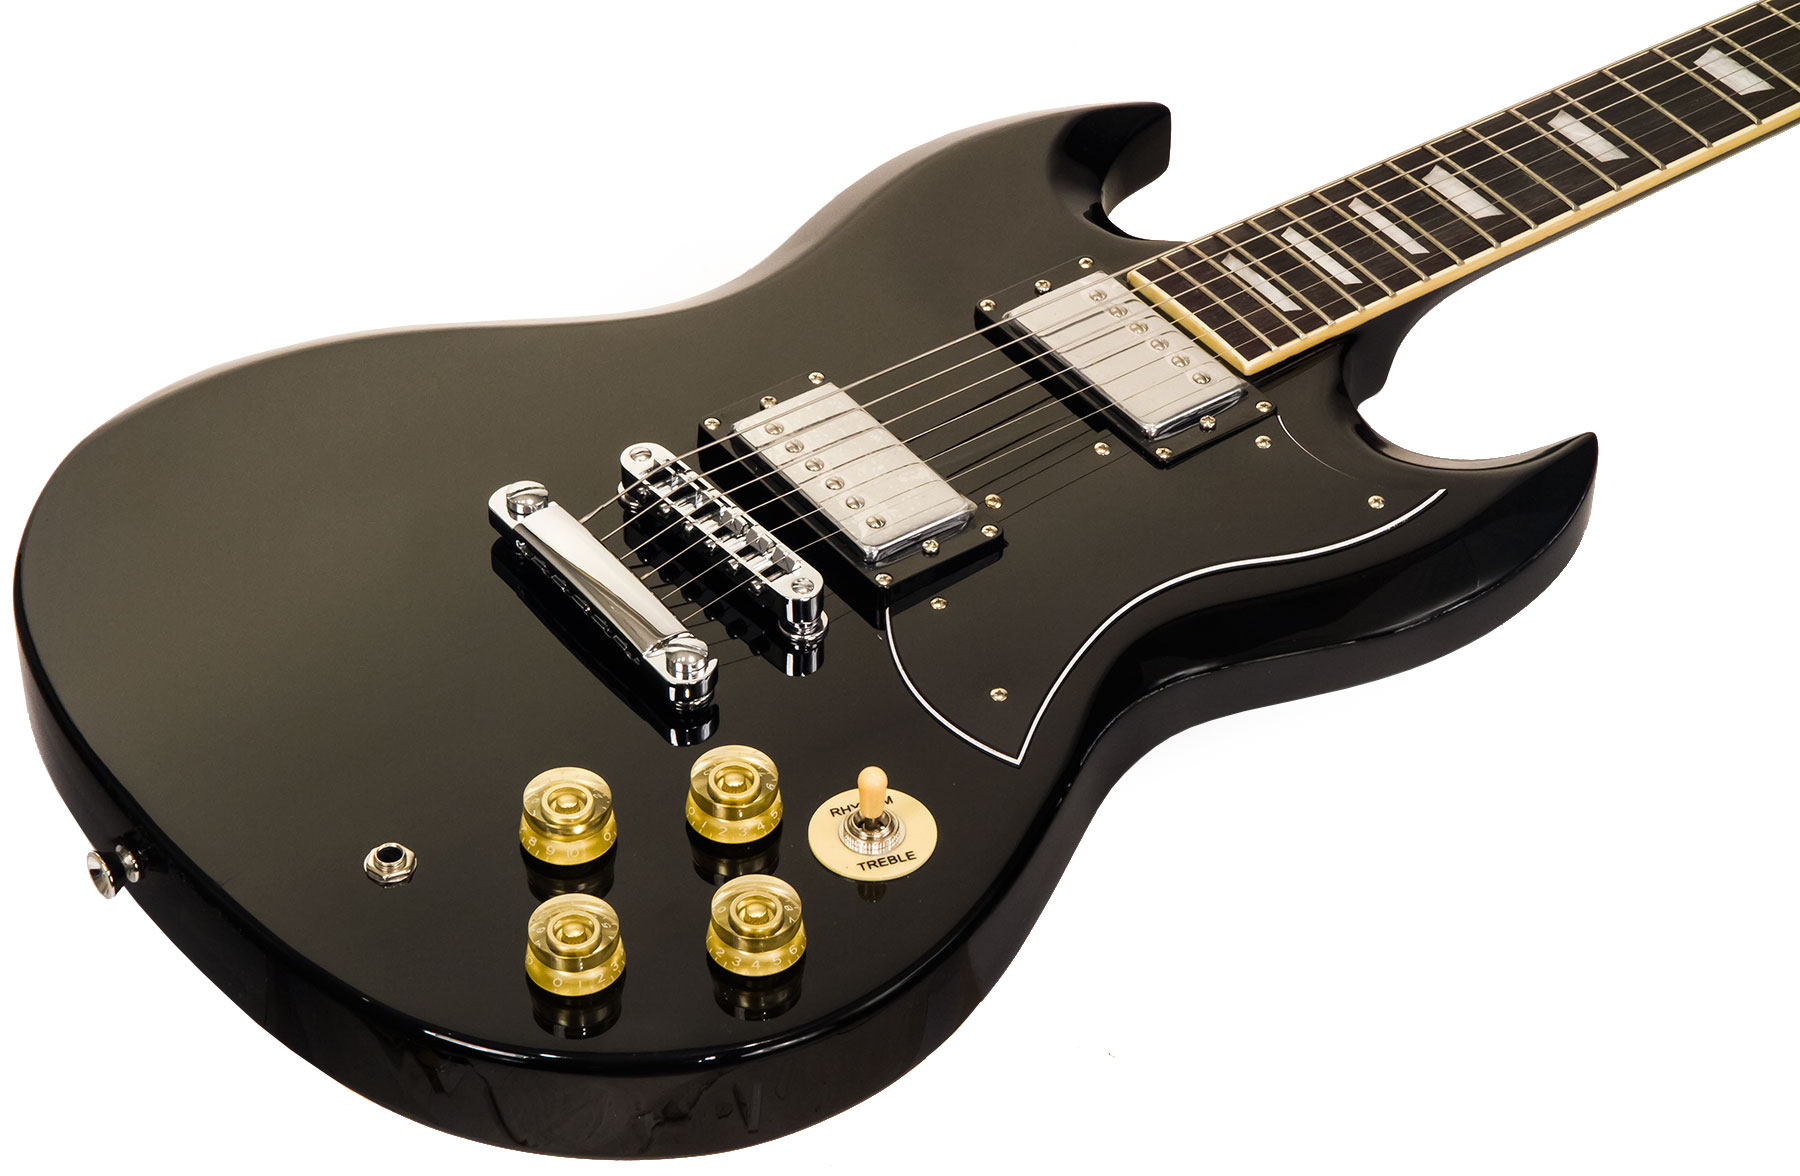 Eastone Sdc70 Hh Ht Pur - Black - Retro rock electric guitar - Variation 1